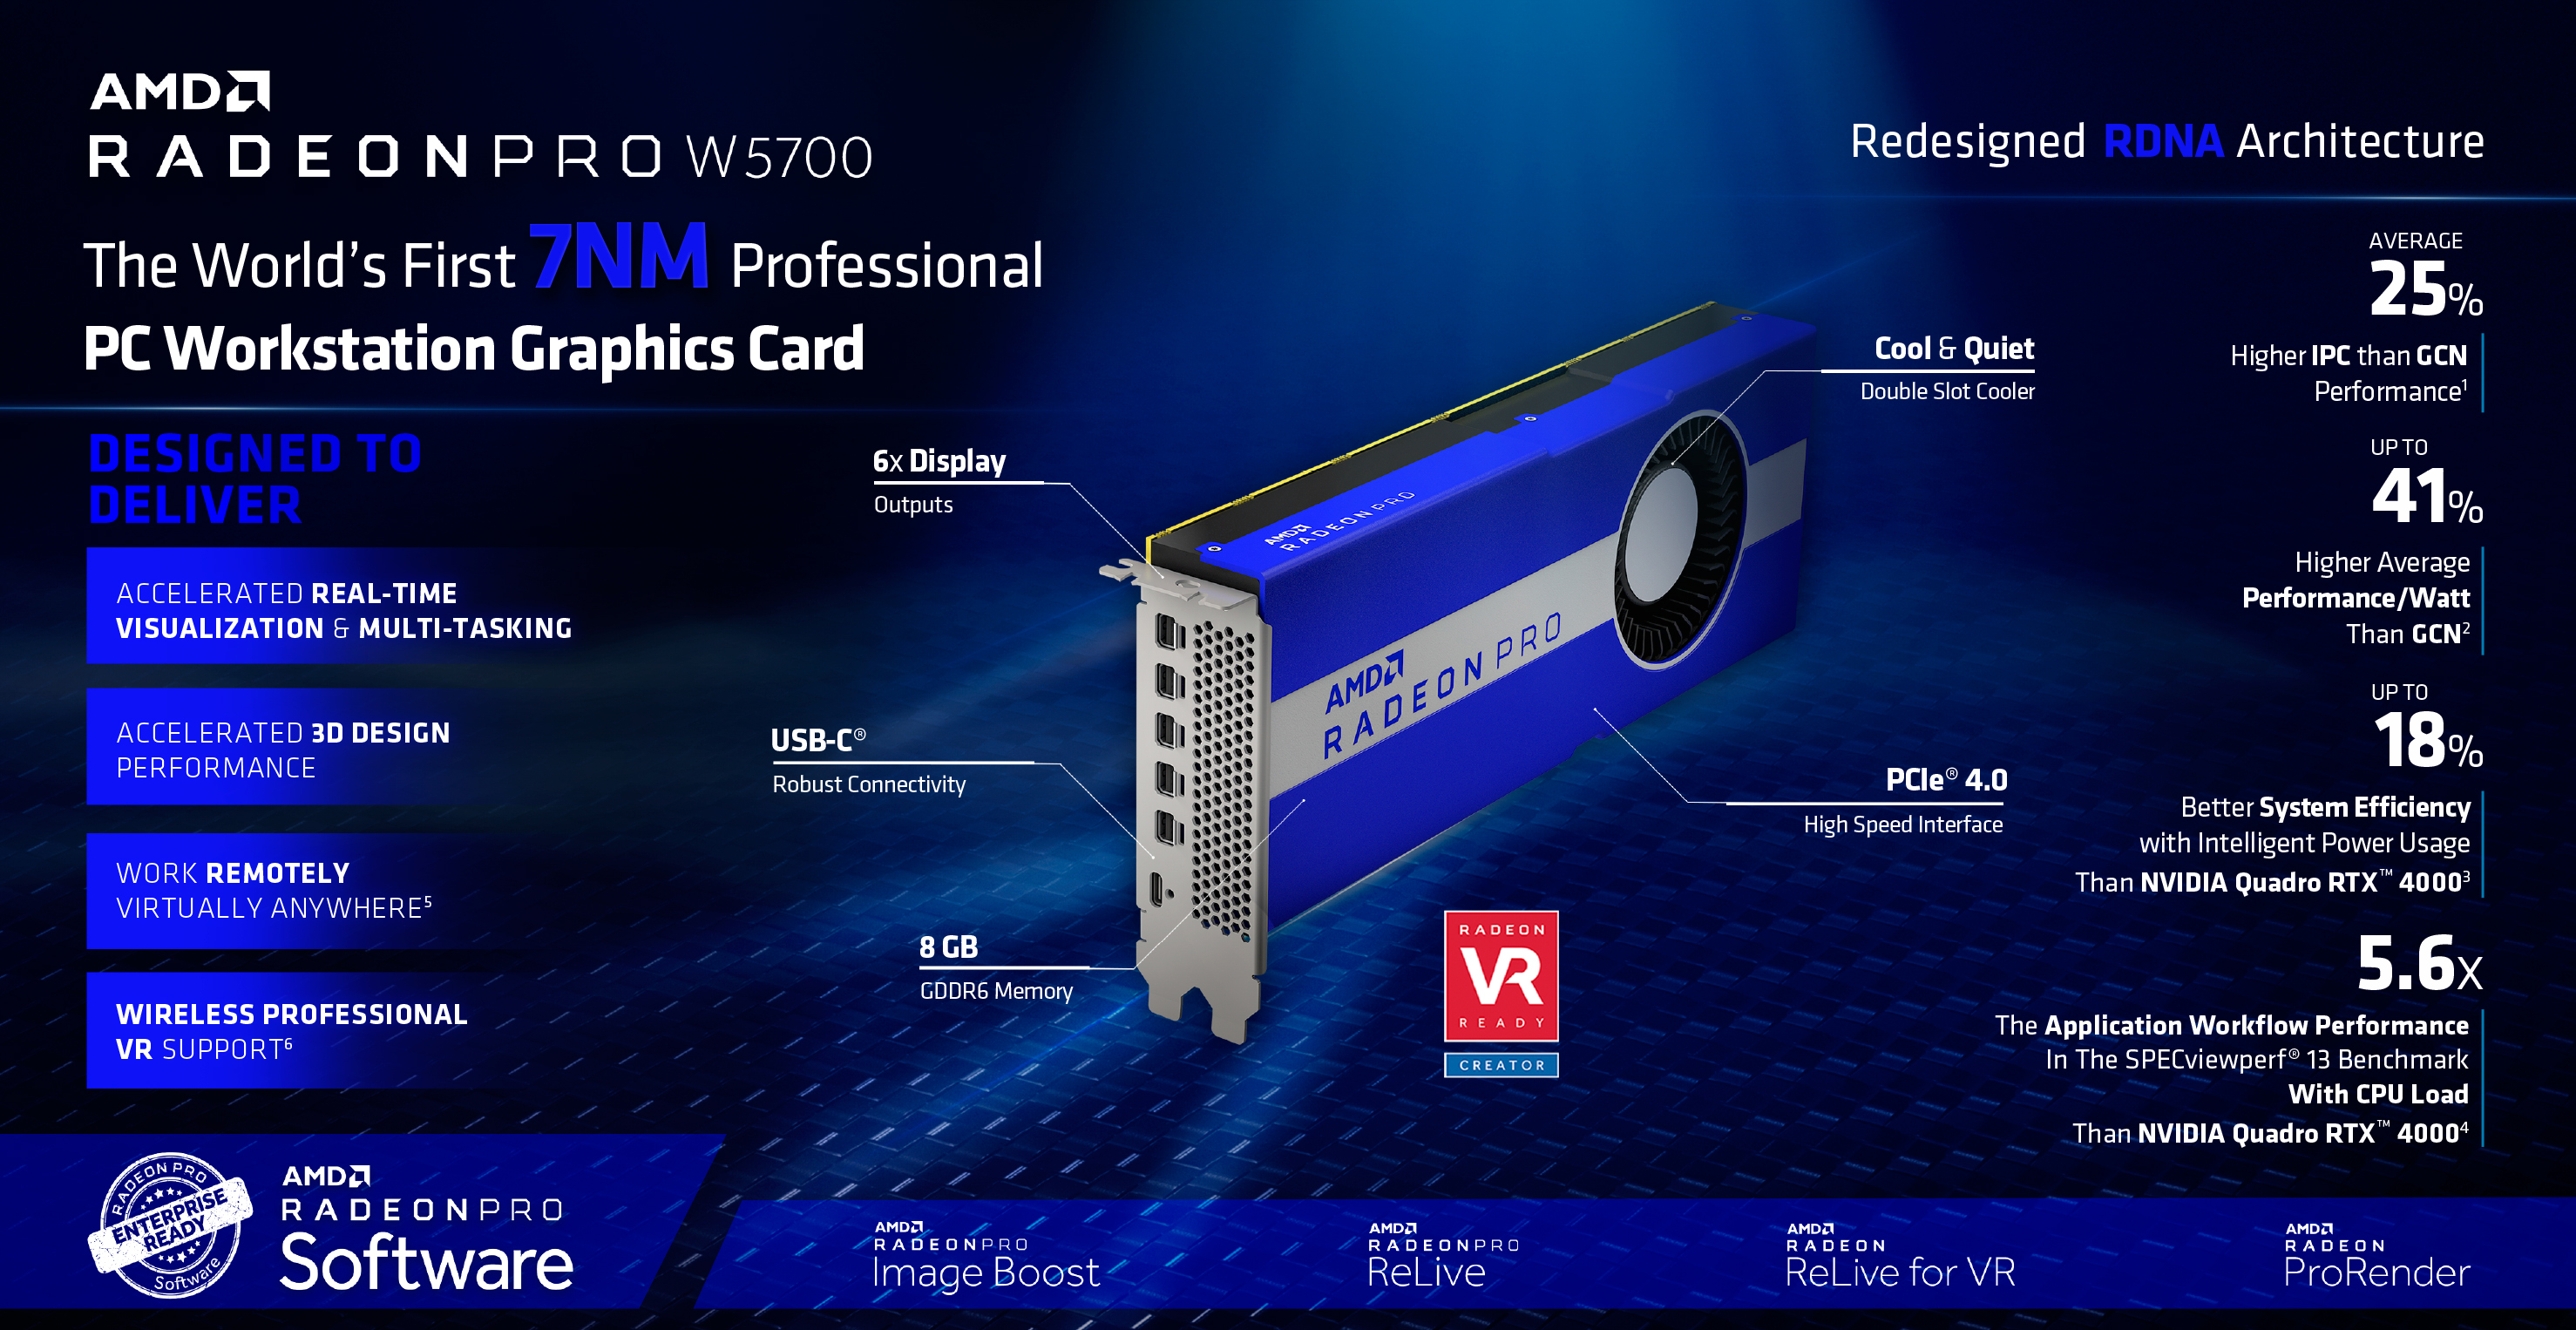 The brand new AMD Radeon Pro W5700 